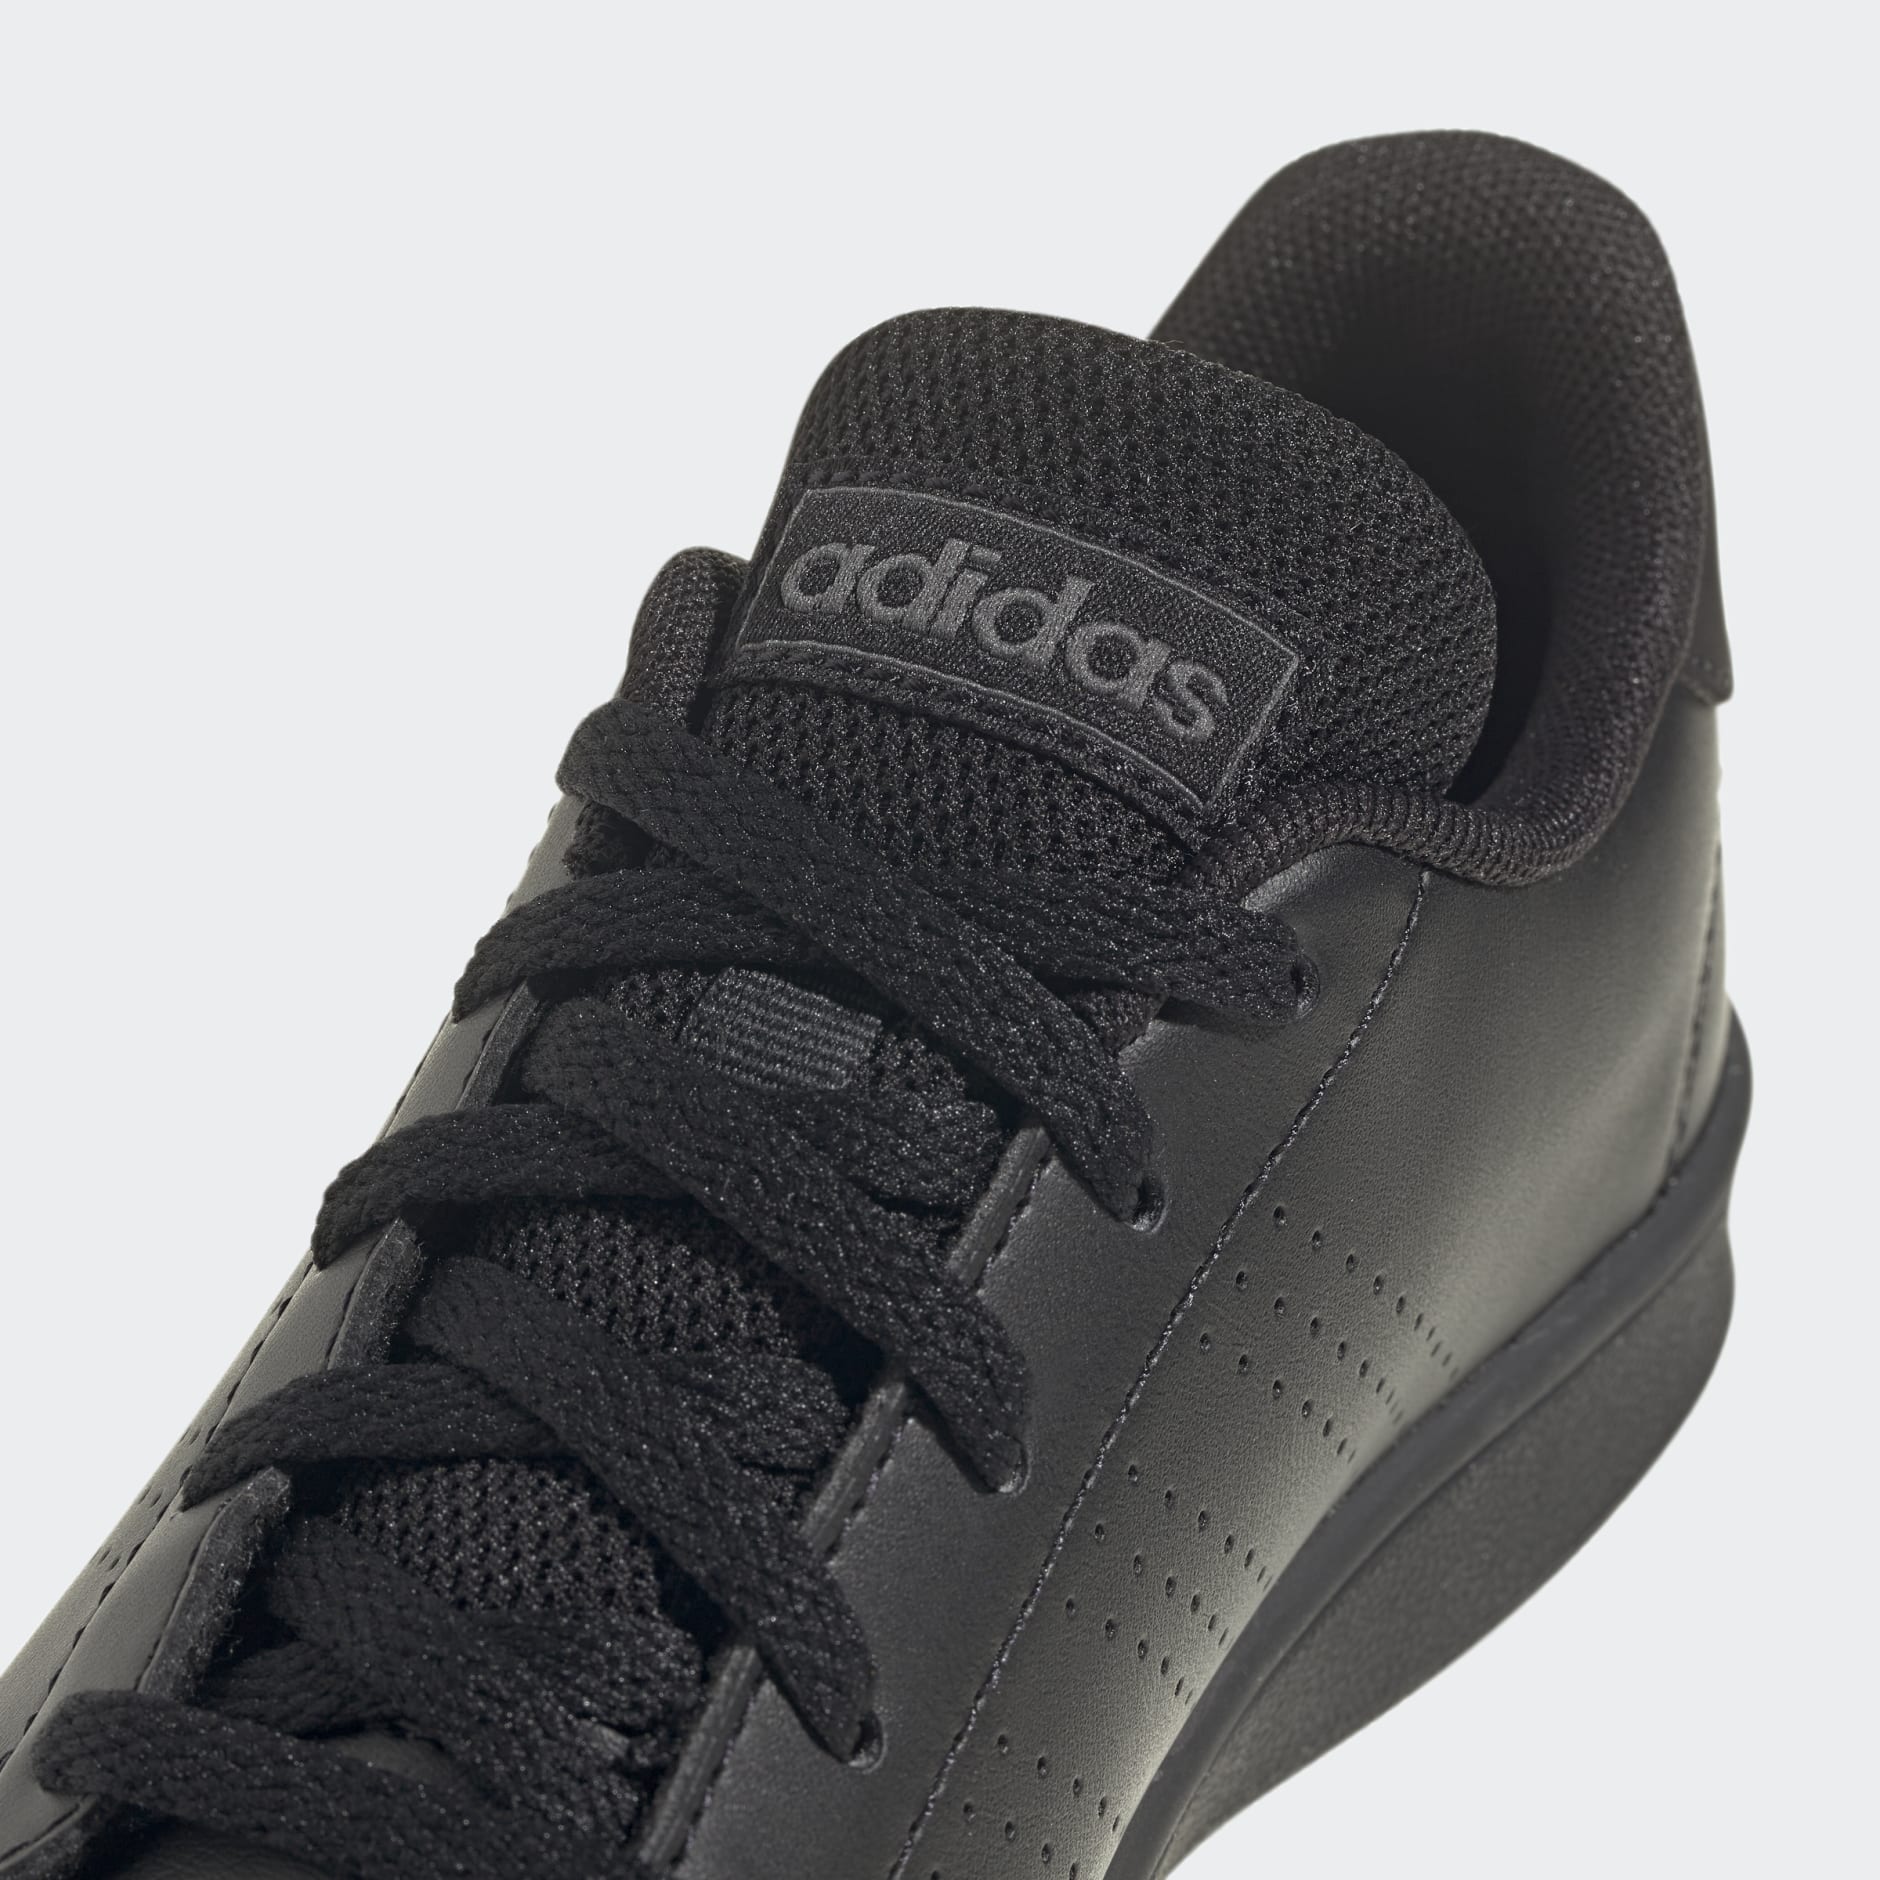 Adidas Men's Cloudfoam Advantage Black Casual Shoes Sneakers Size 11 AW3915  | eBay